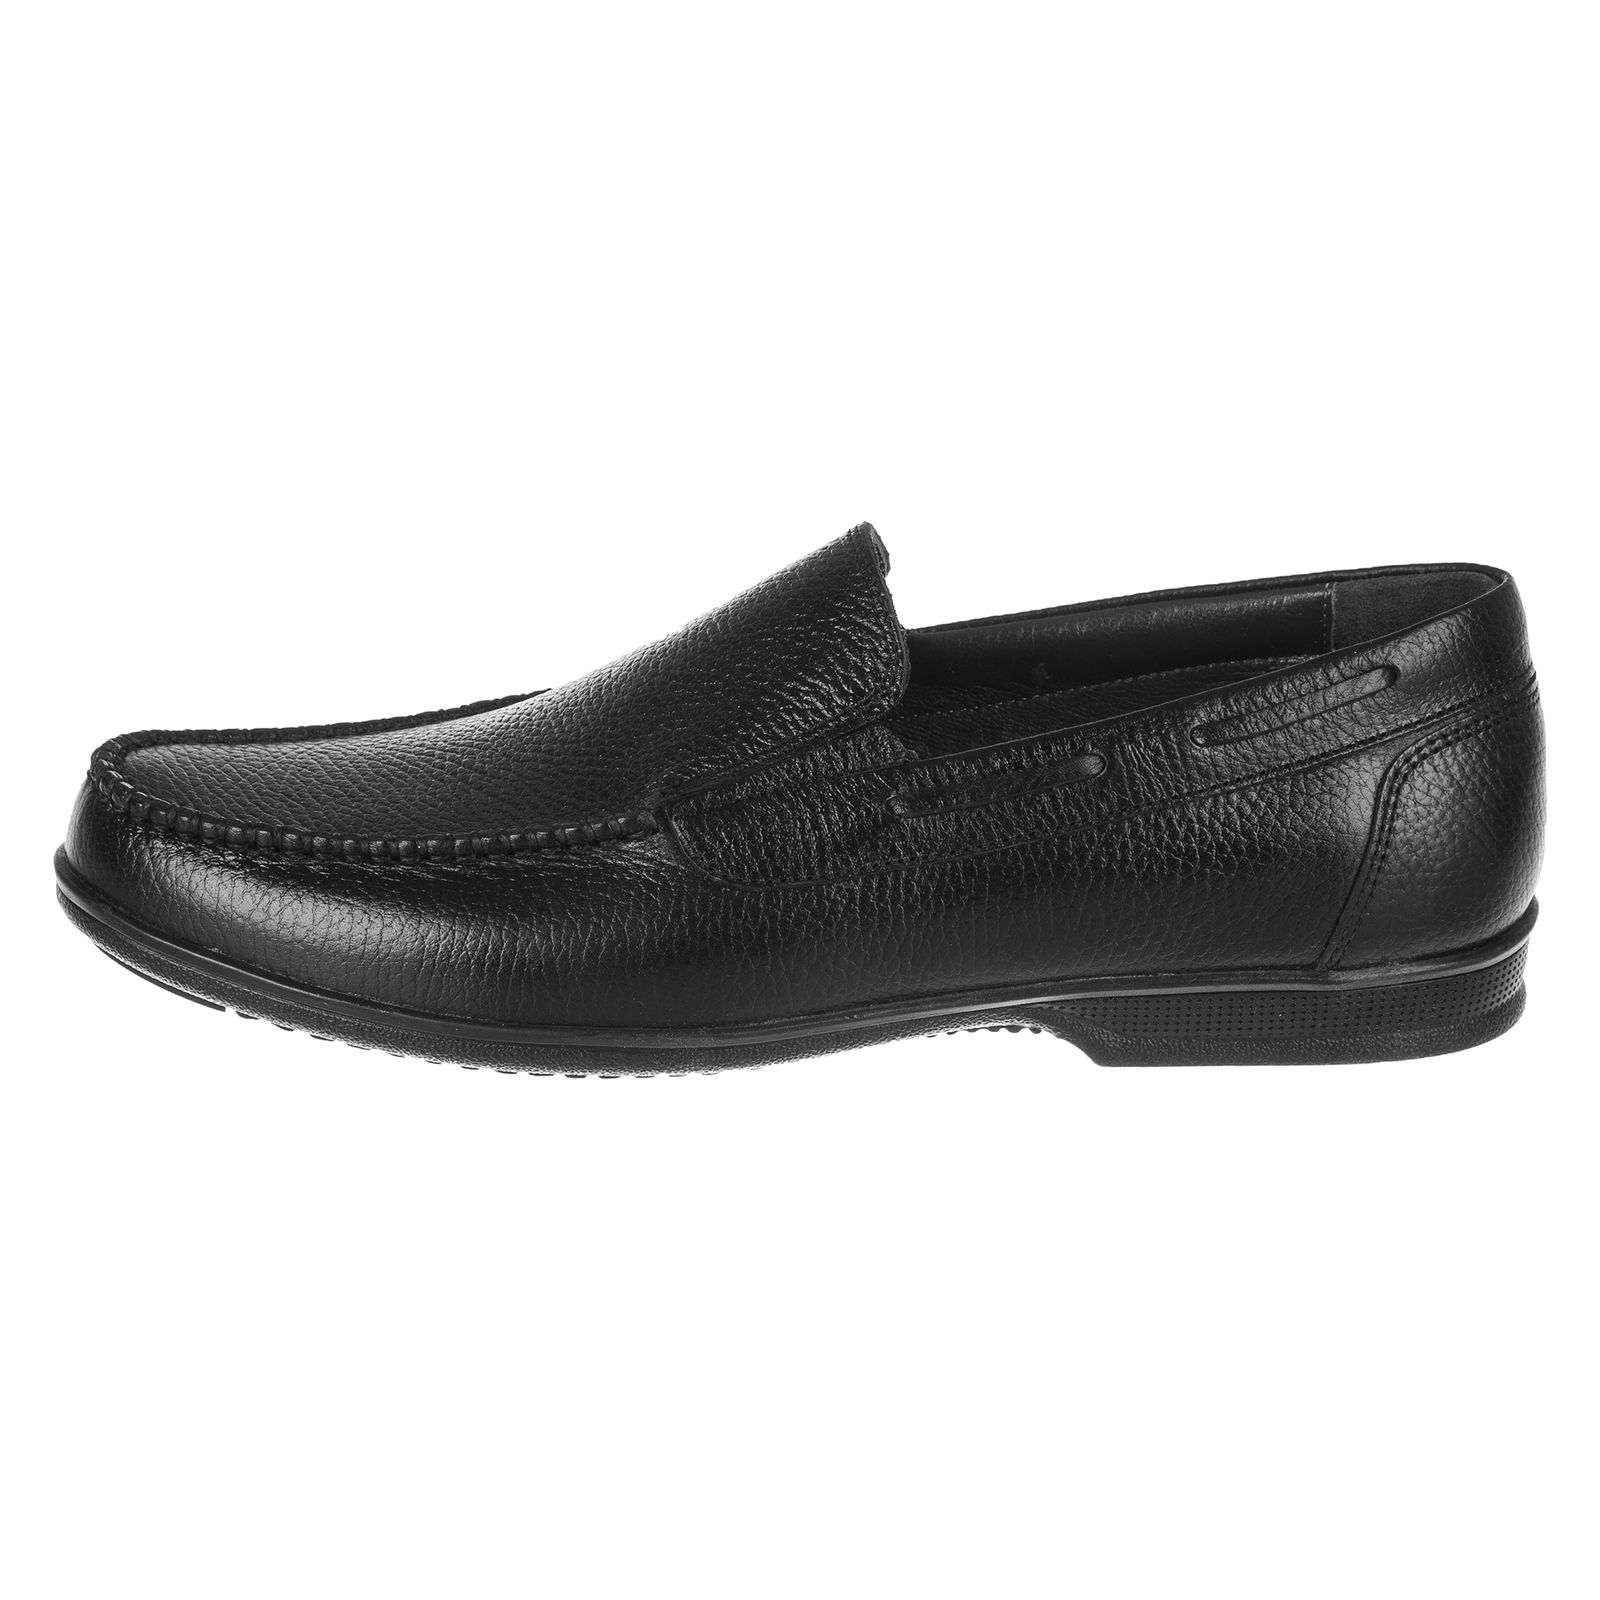 کفش روزمره مردانه دانادل مدل 7001H503101 - مشکی - 1